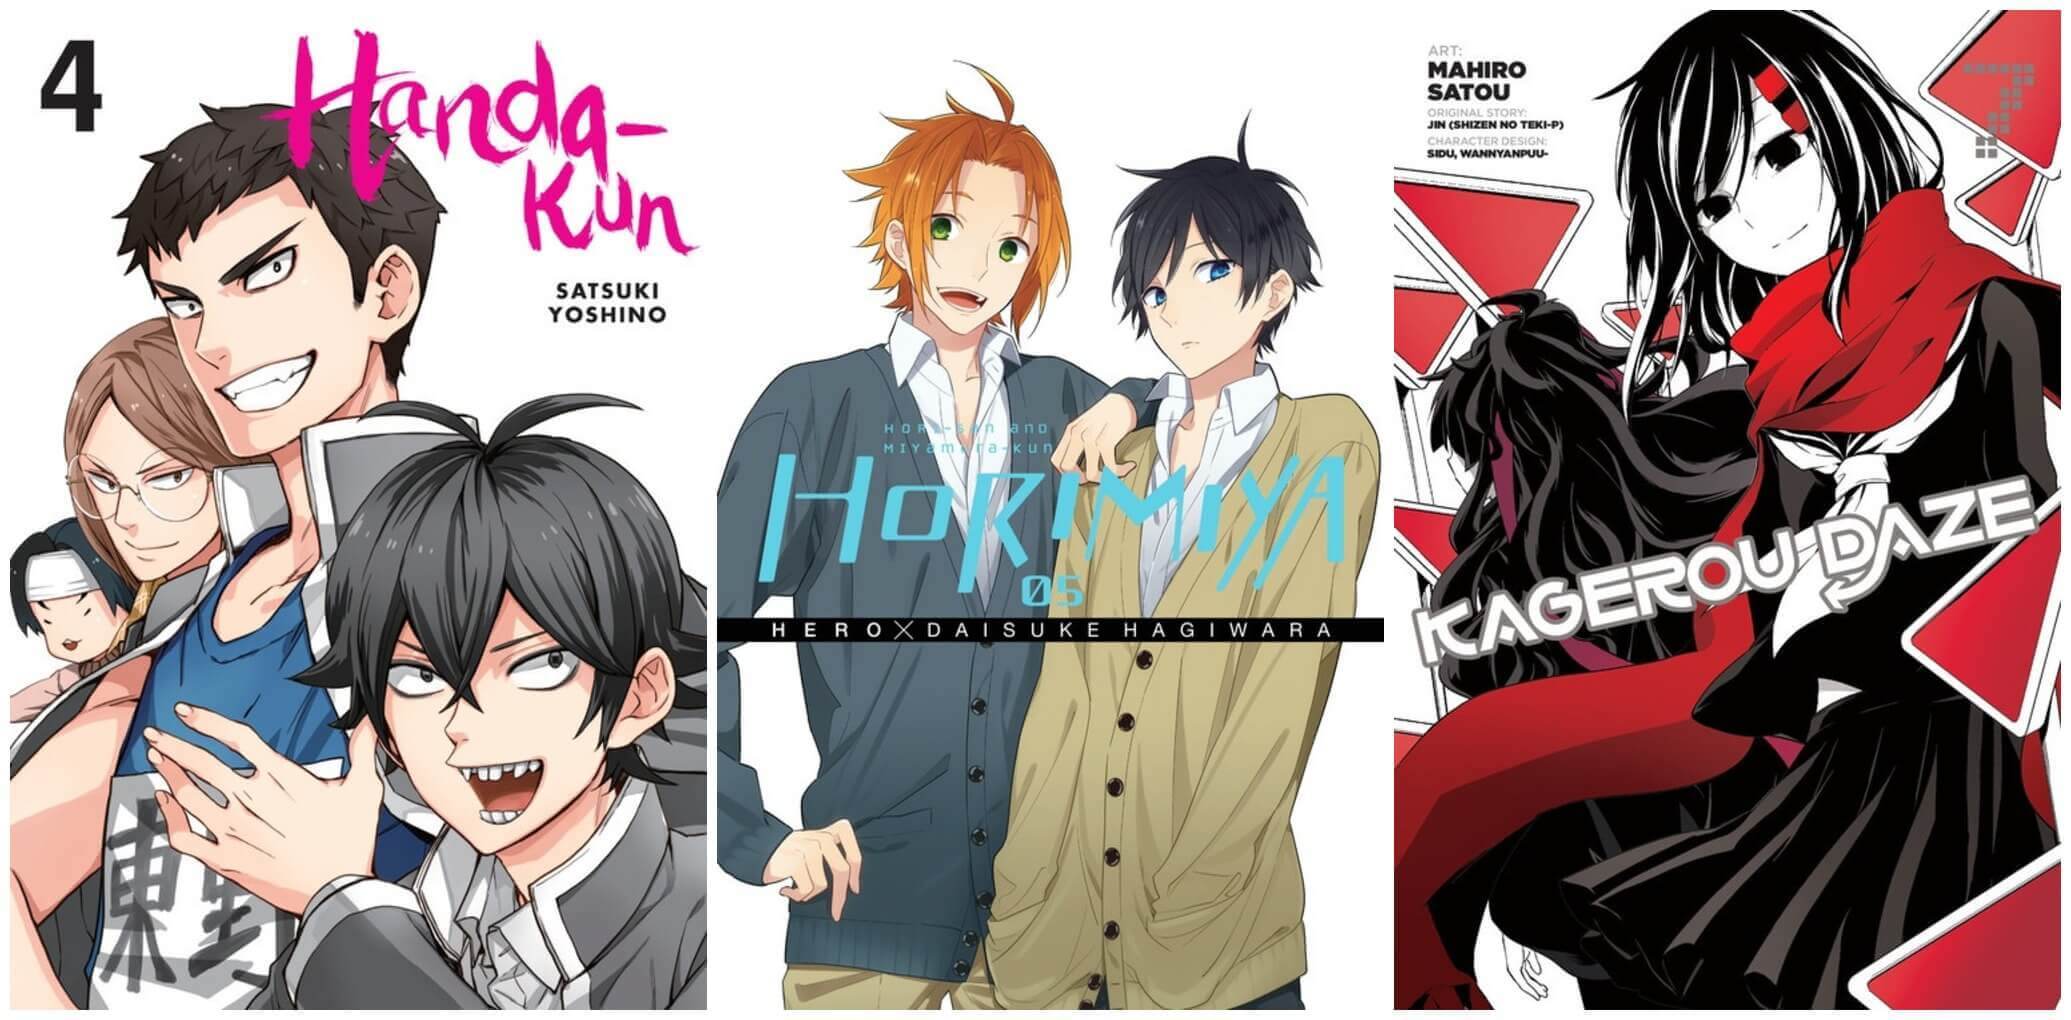 October 2016 Manga Releases Covers for Handa-kun, Horimiya, and Kagerou Daze.